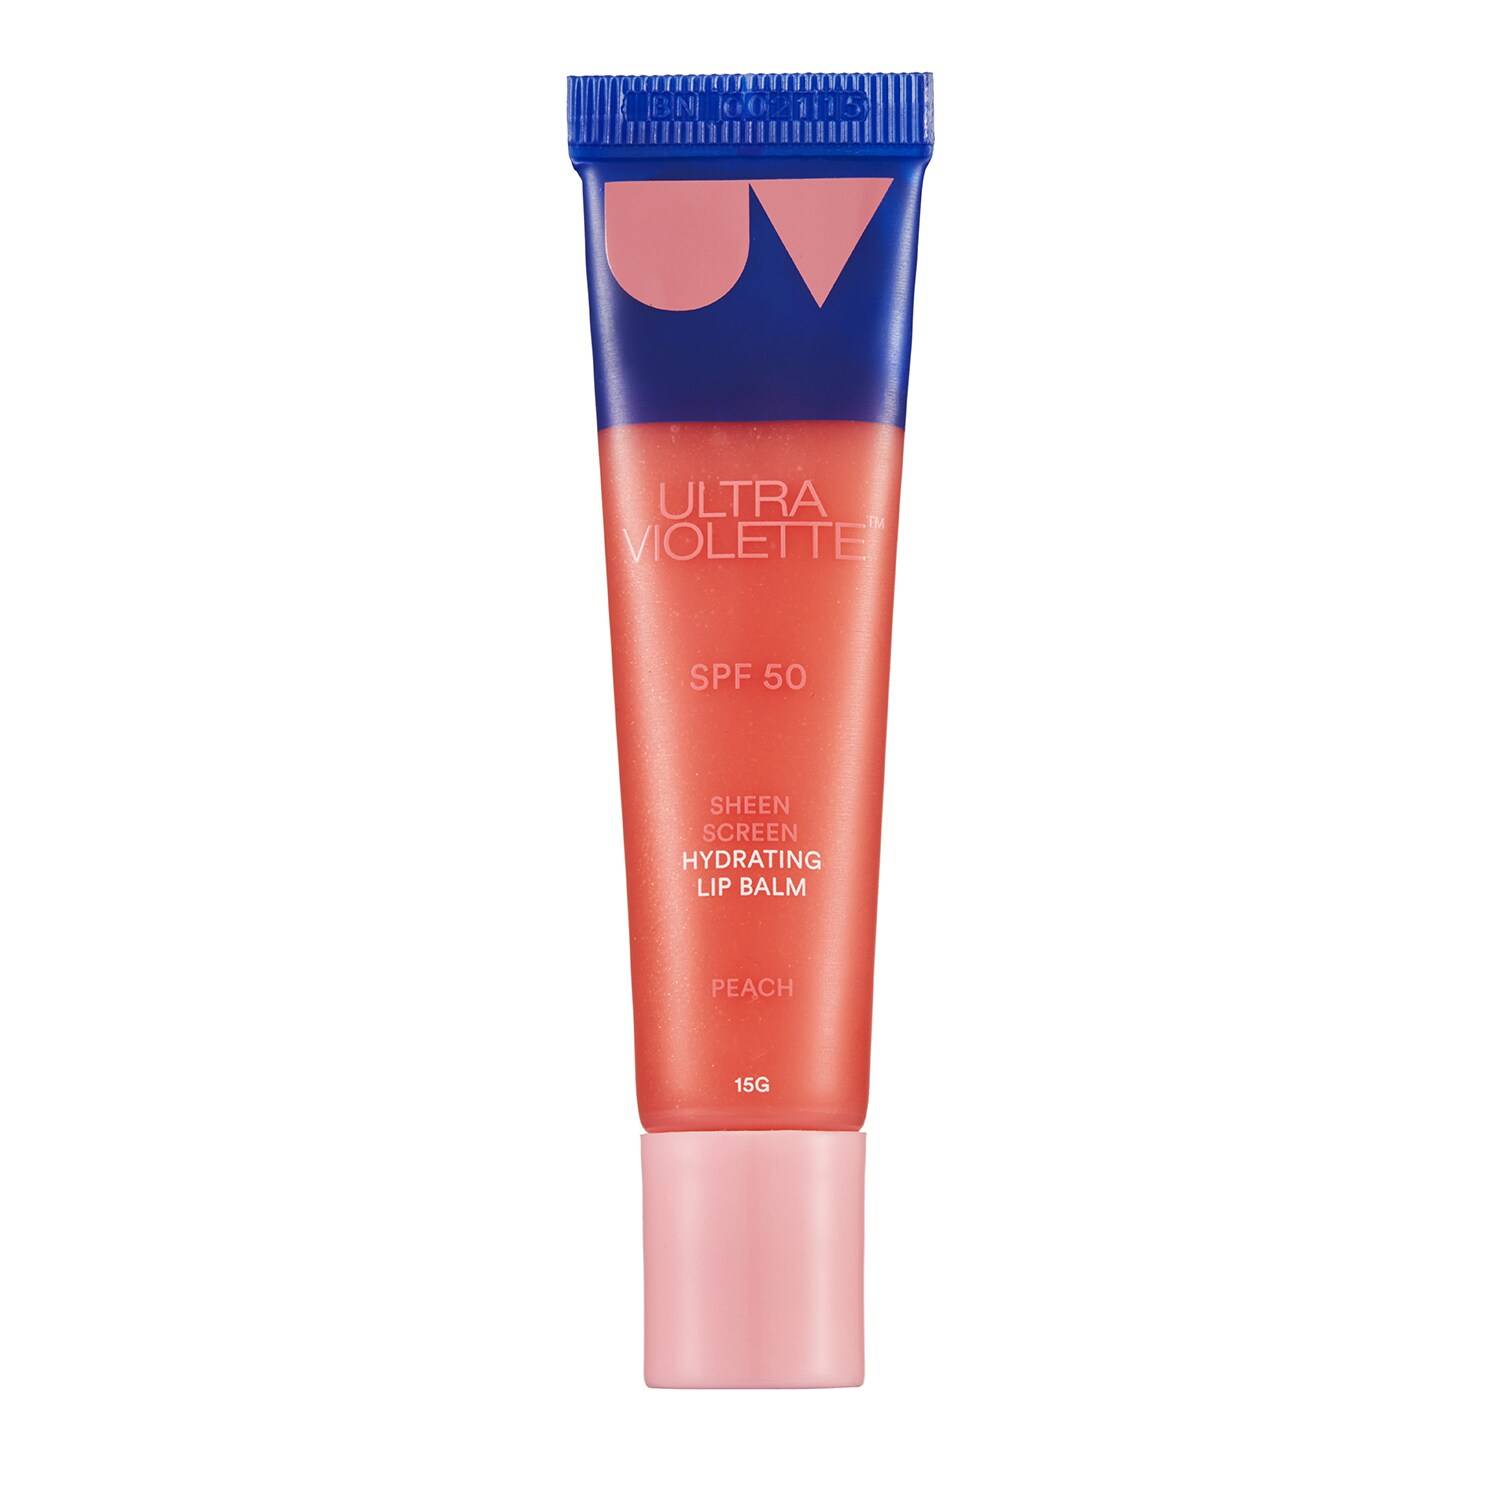 Ultra Violette Sheen Screen Hydrating Lip Balm Spf50 15G Peach